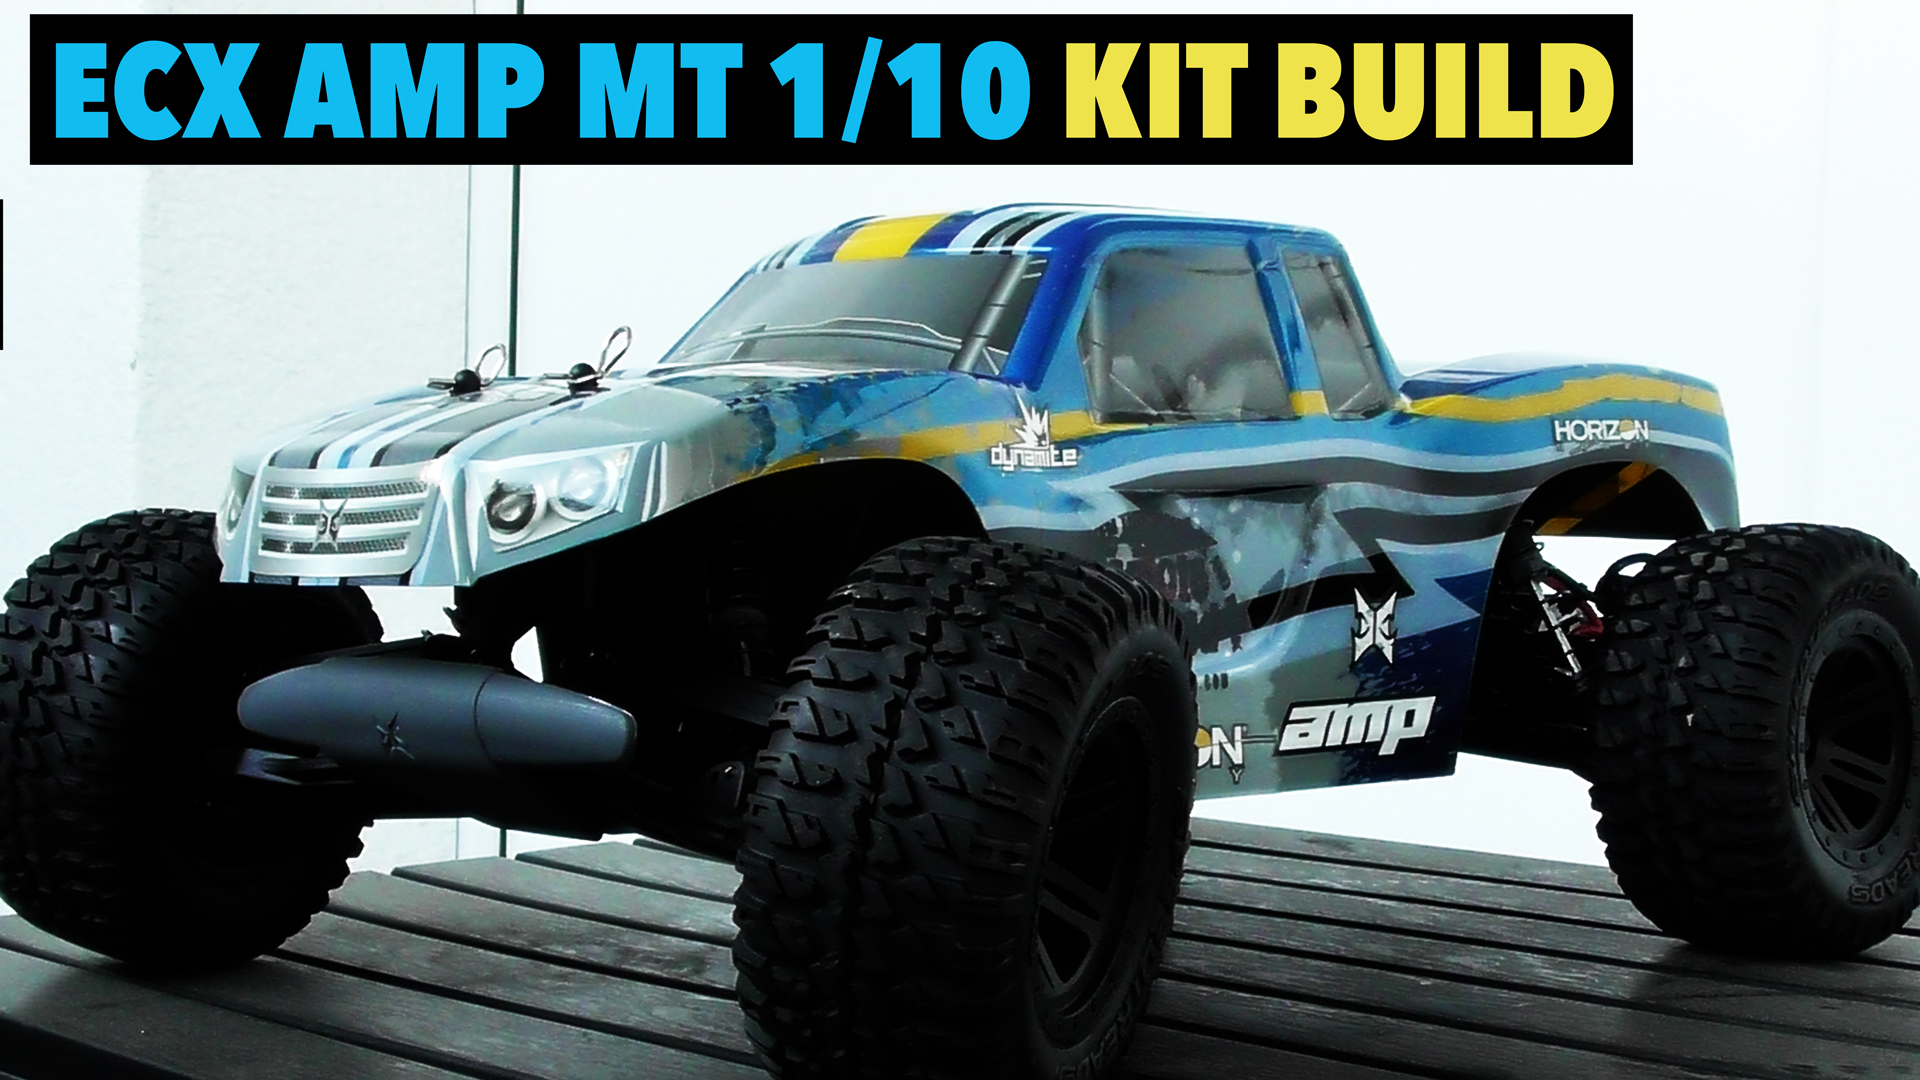 ecx amp mt kit build